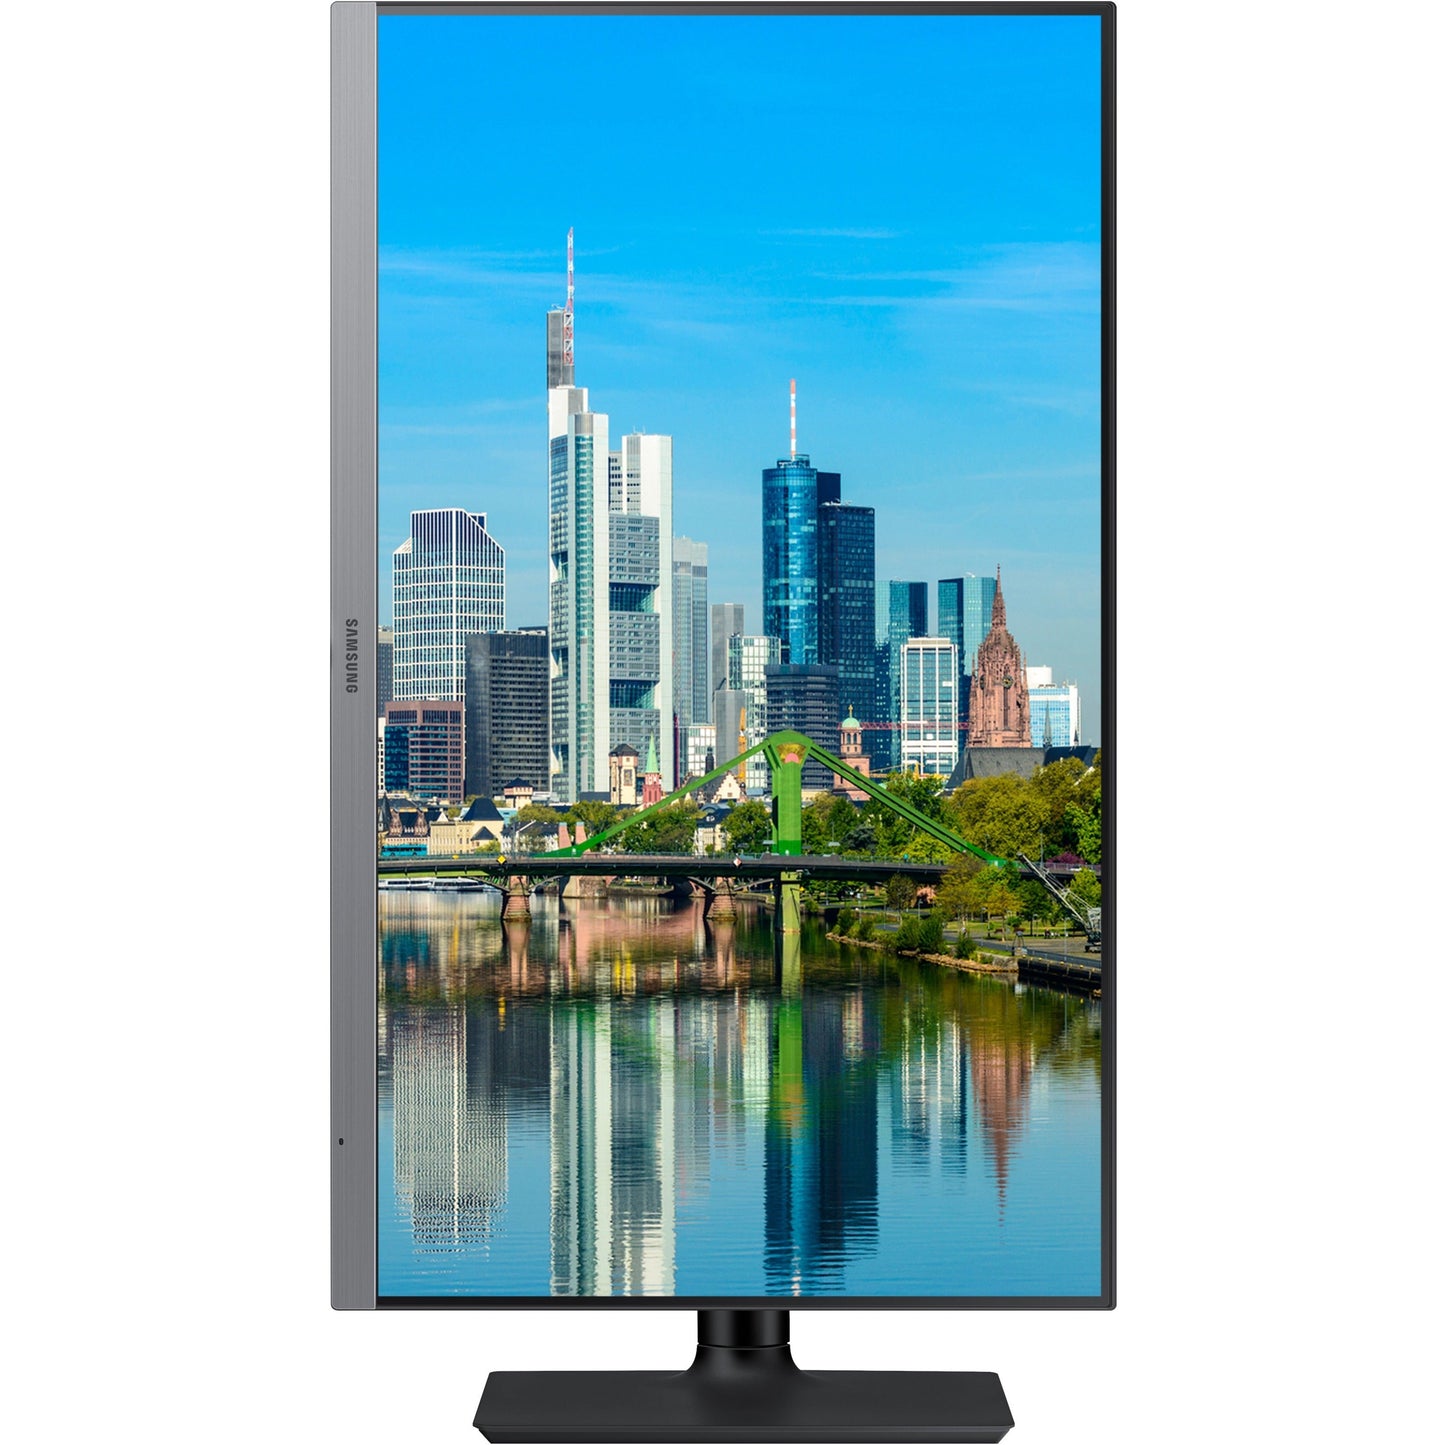 Samsung F24T650FYN 24" Full HD LCD Monitor - 16:9 - Dark Blue Gray